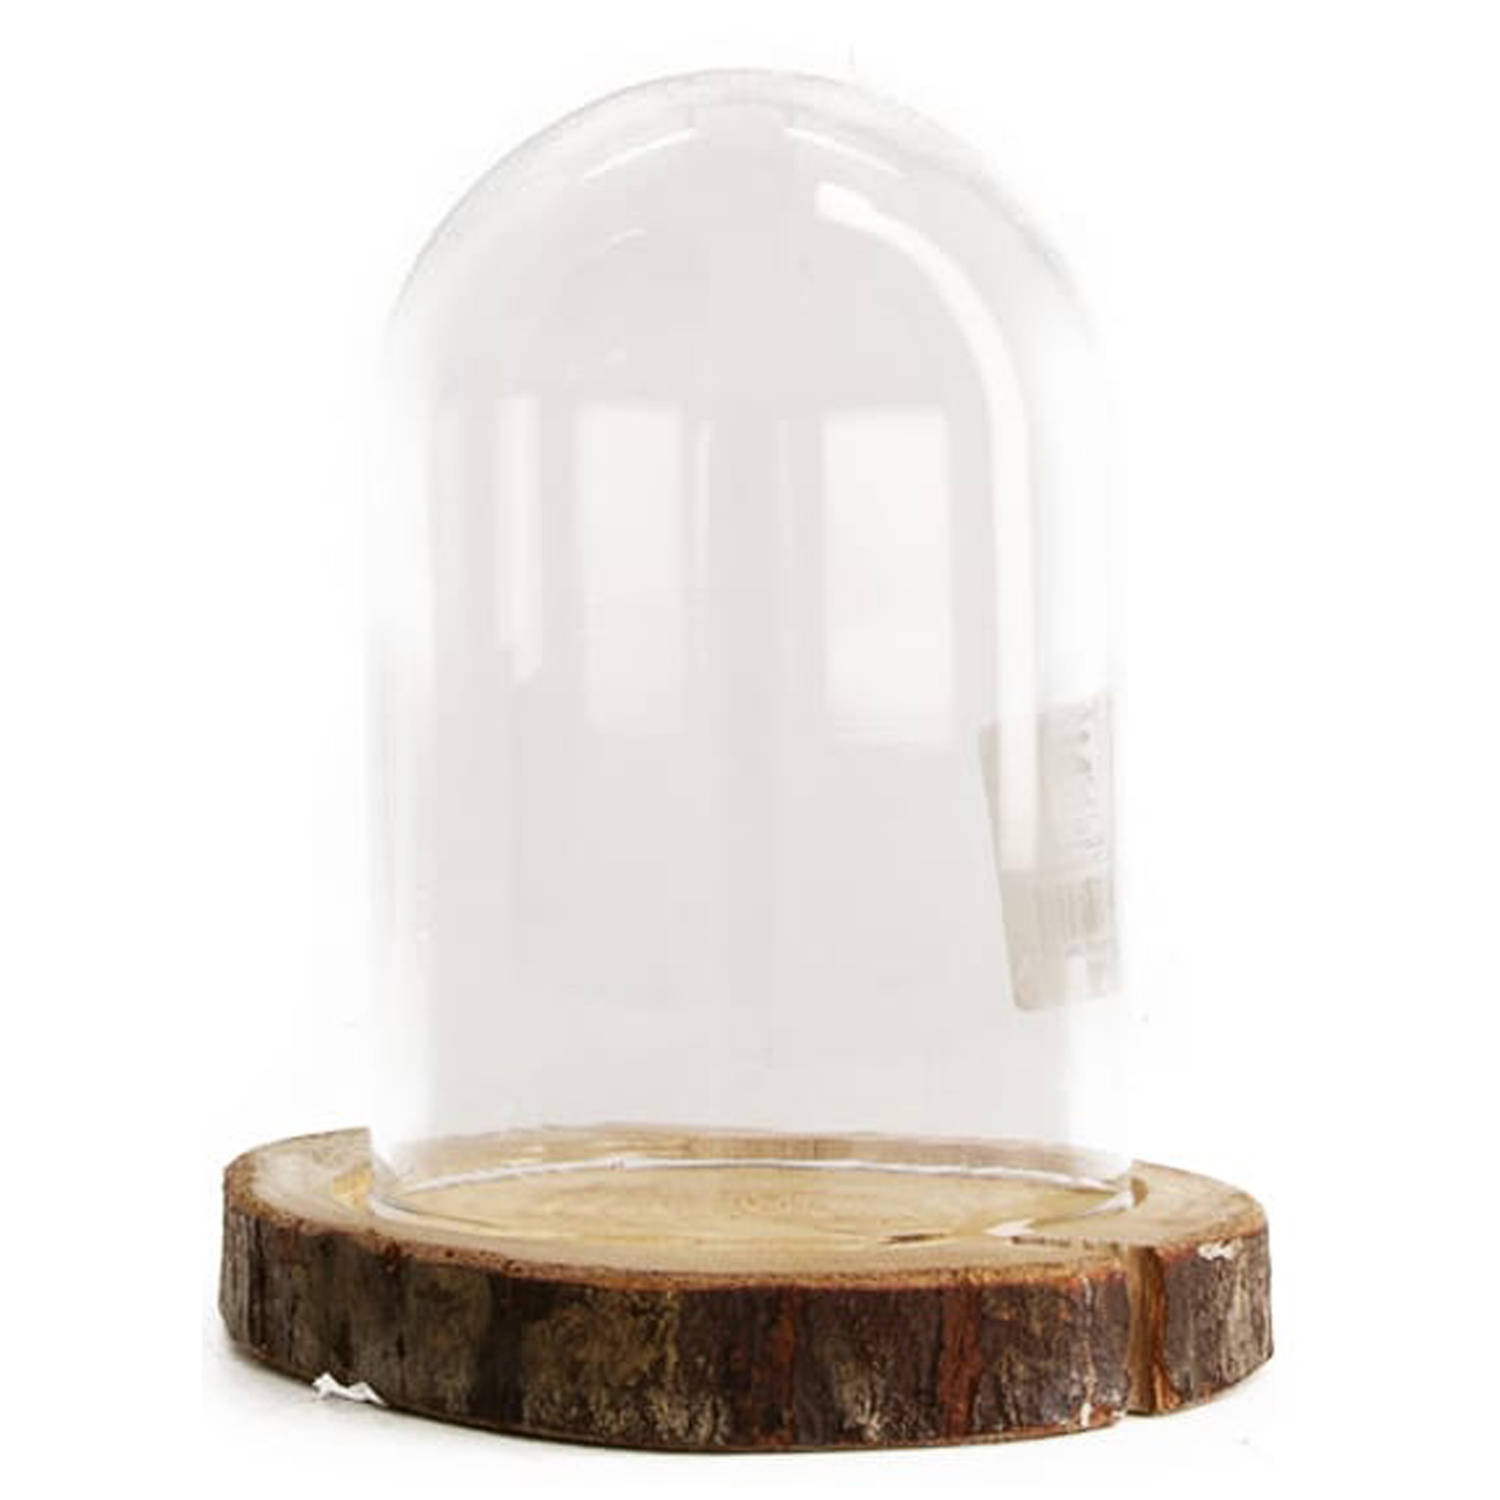 Dijk Natural Collections stolp glas houten bruin plateau D13 x H17,5 cm Decoratieve stolpen